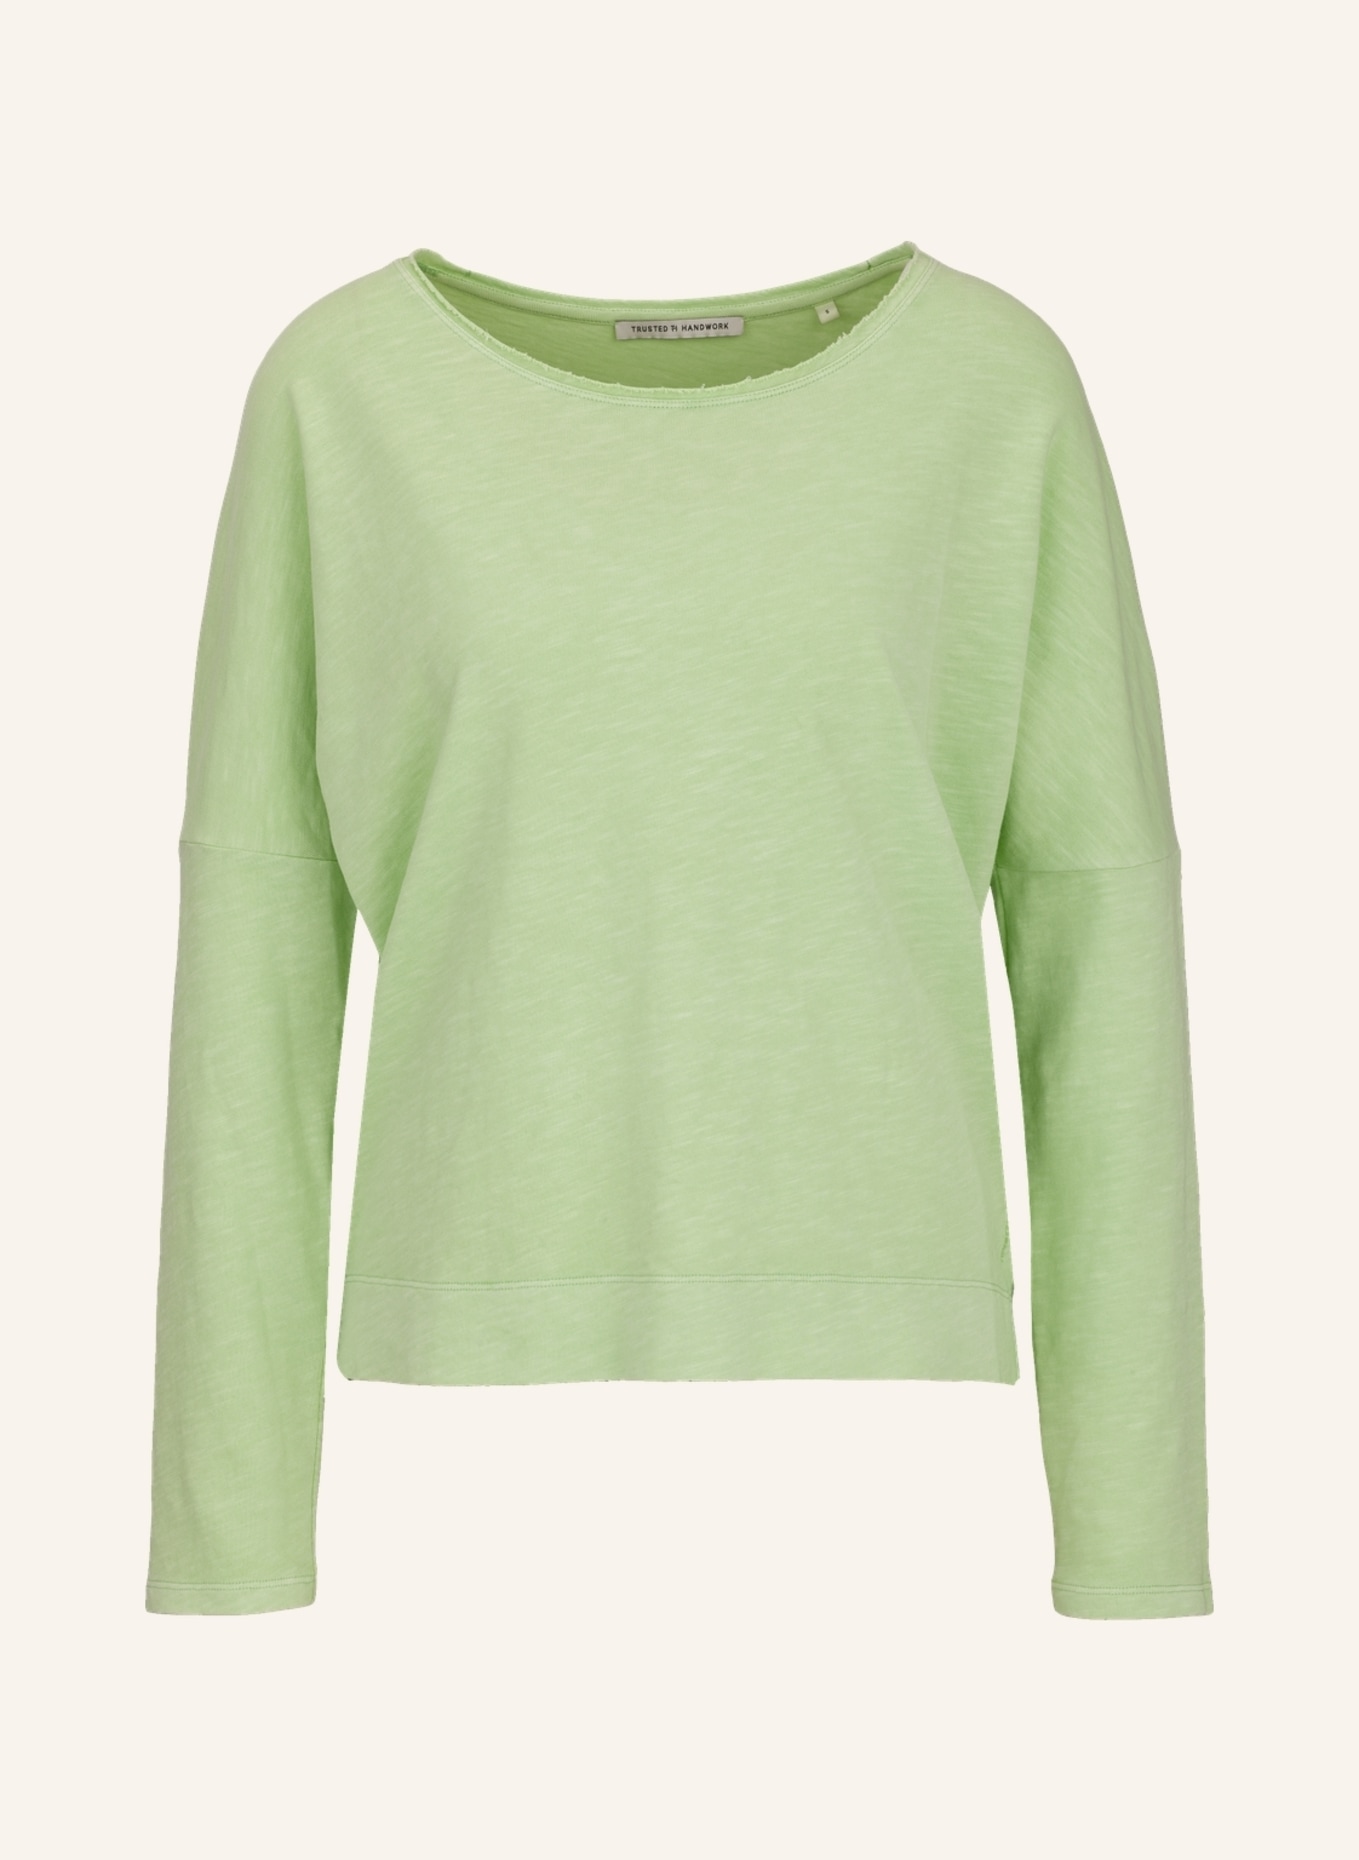 TRUSTED HANDWORK Shirt LIMOGES, Farbe: GRÜN (Bild 1)